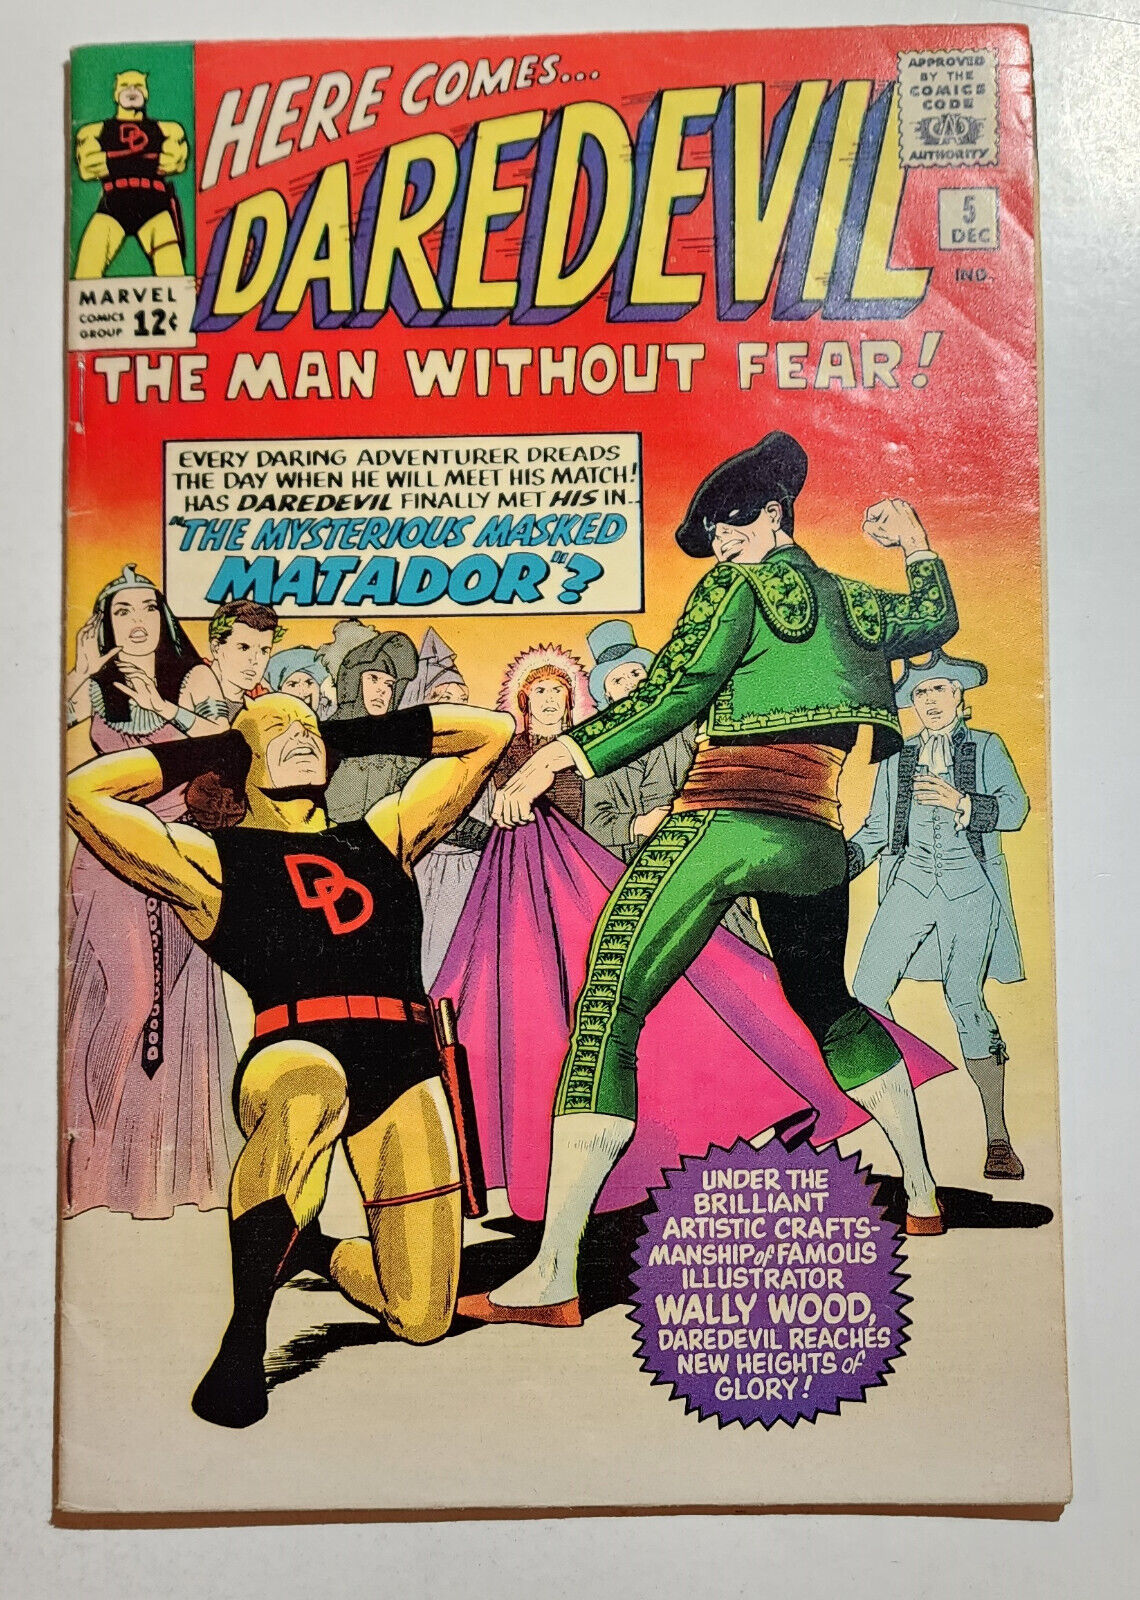 DAREDEVIL #5 1964 1st MATADOR, Stan Lee, Wally Wood, last Red & Yellow costume